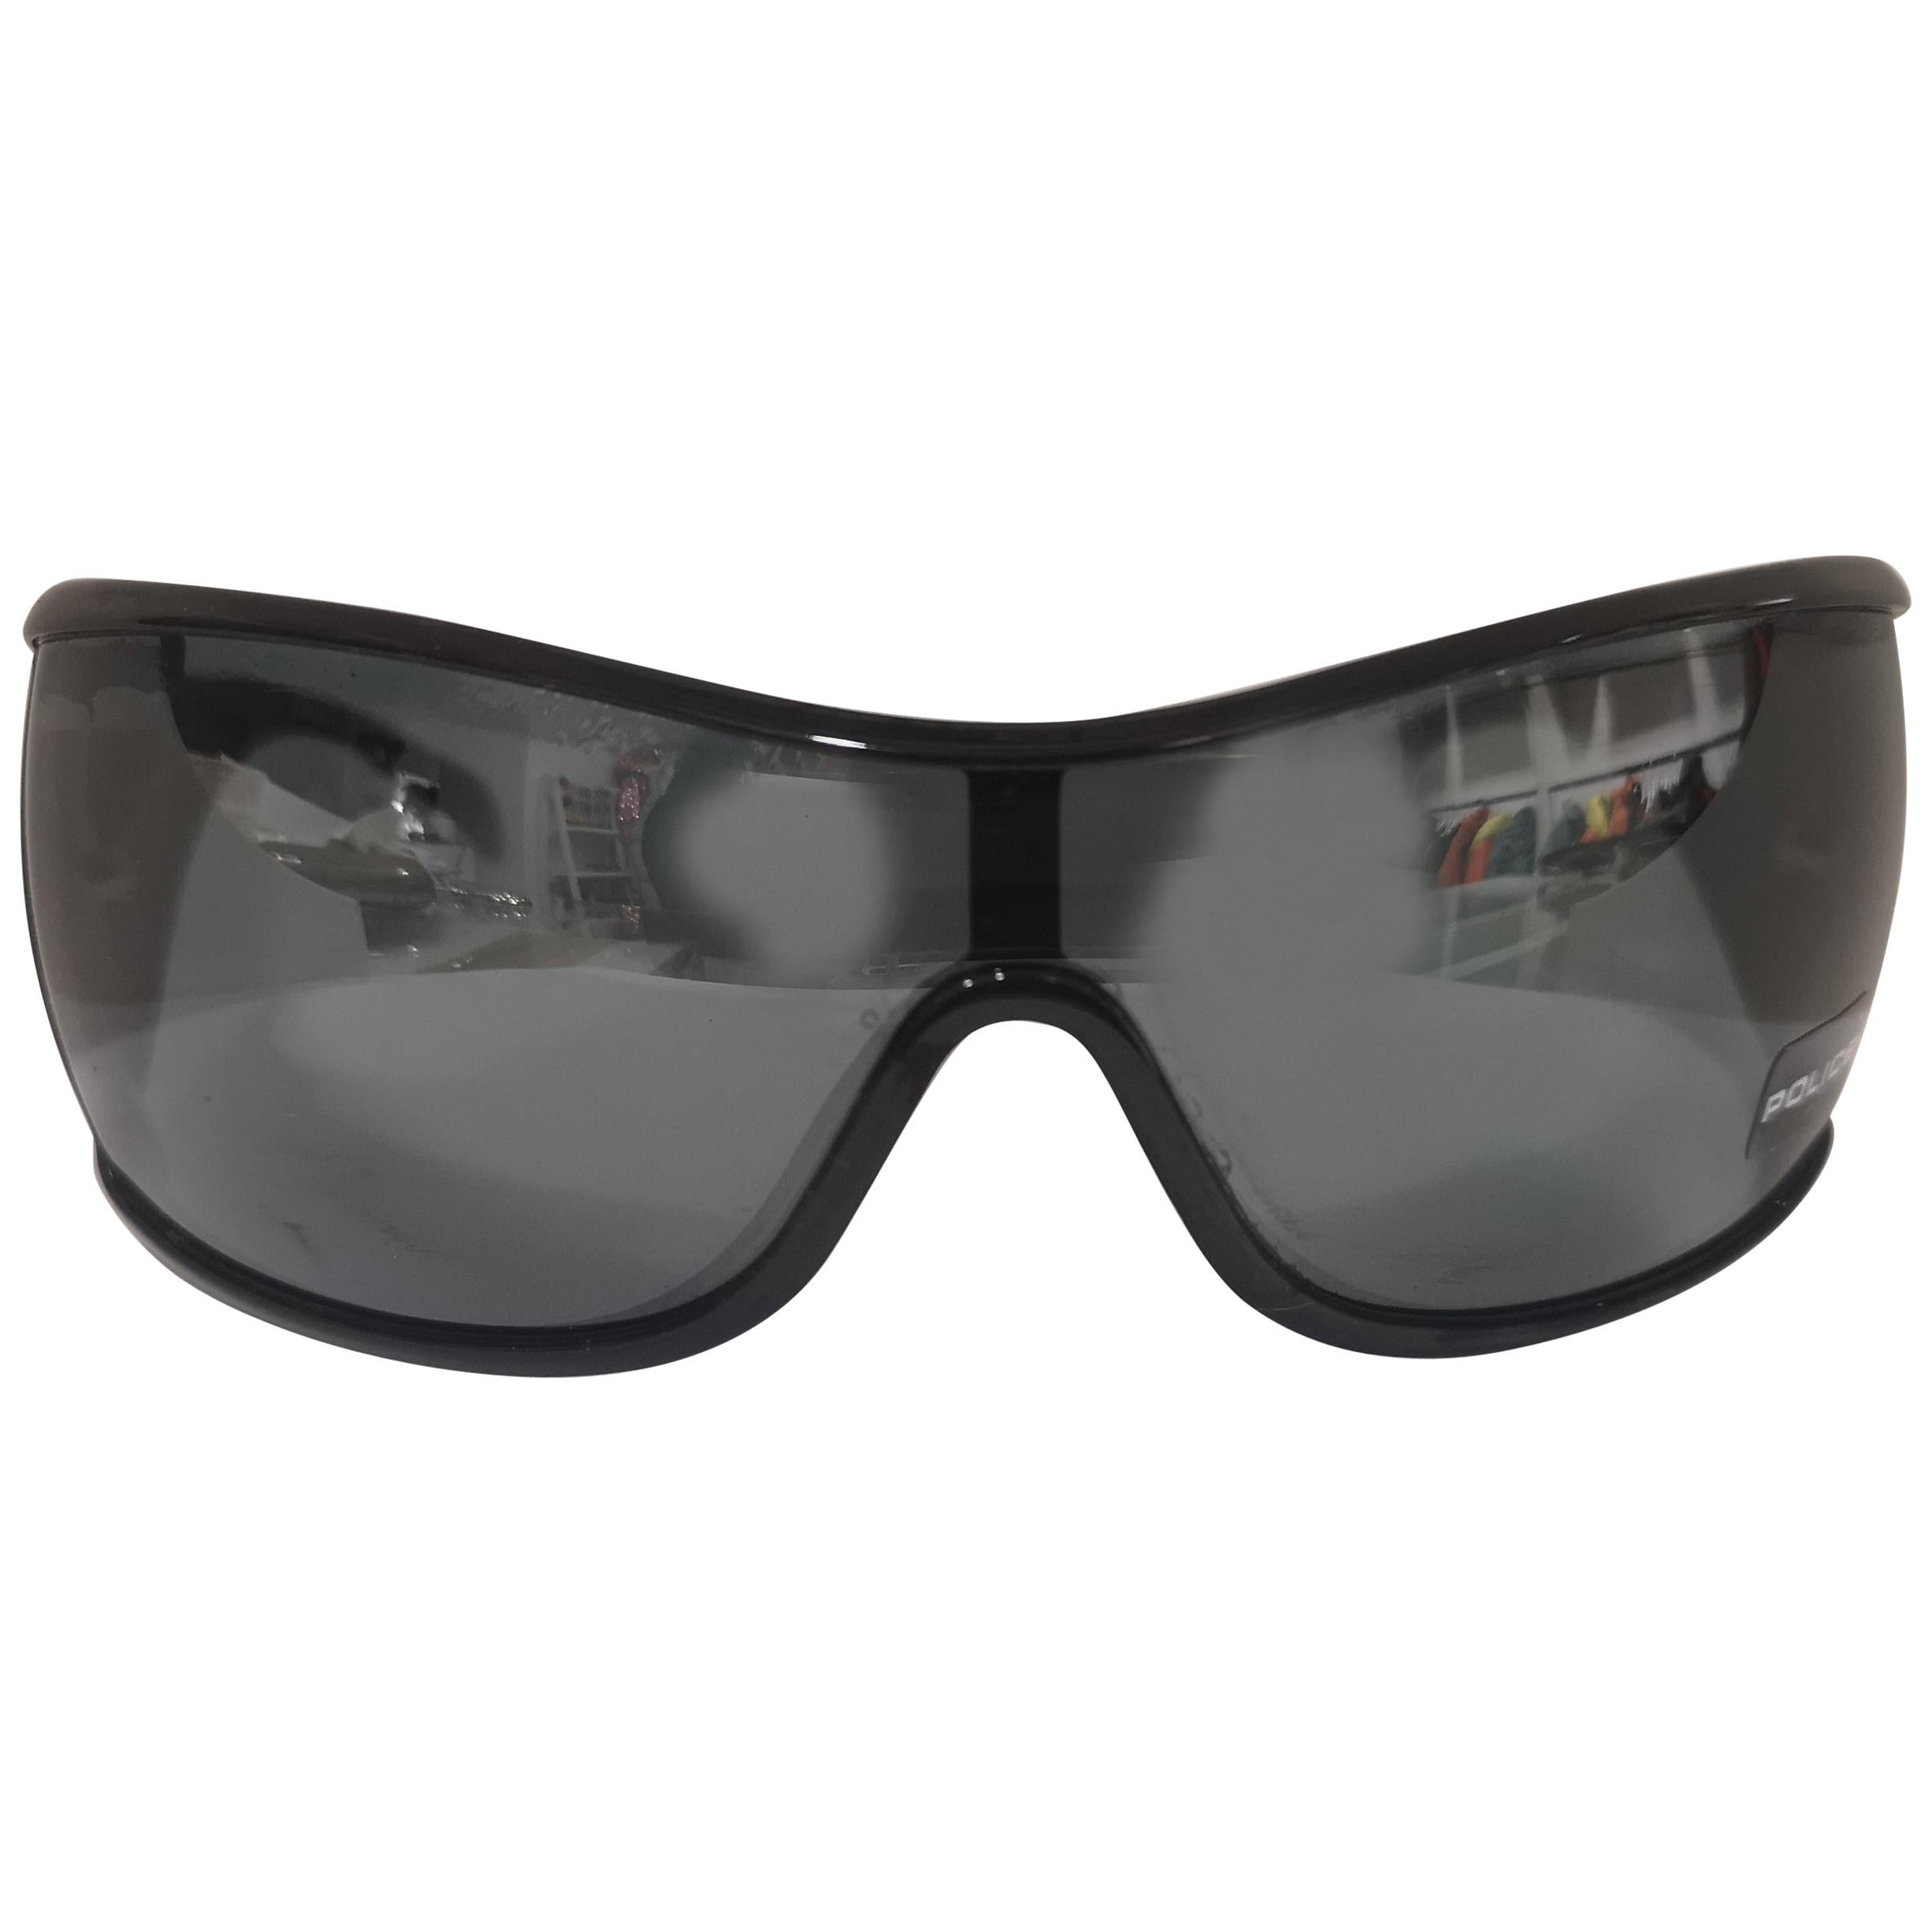 Police black mask sunglasses with swarovski stones